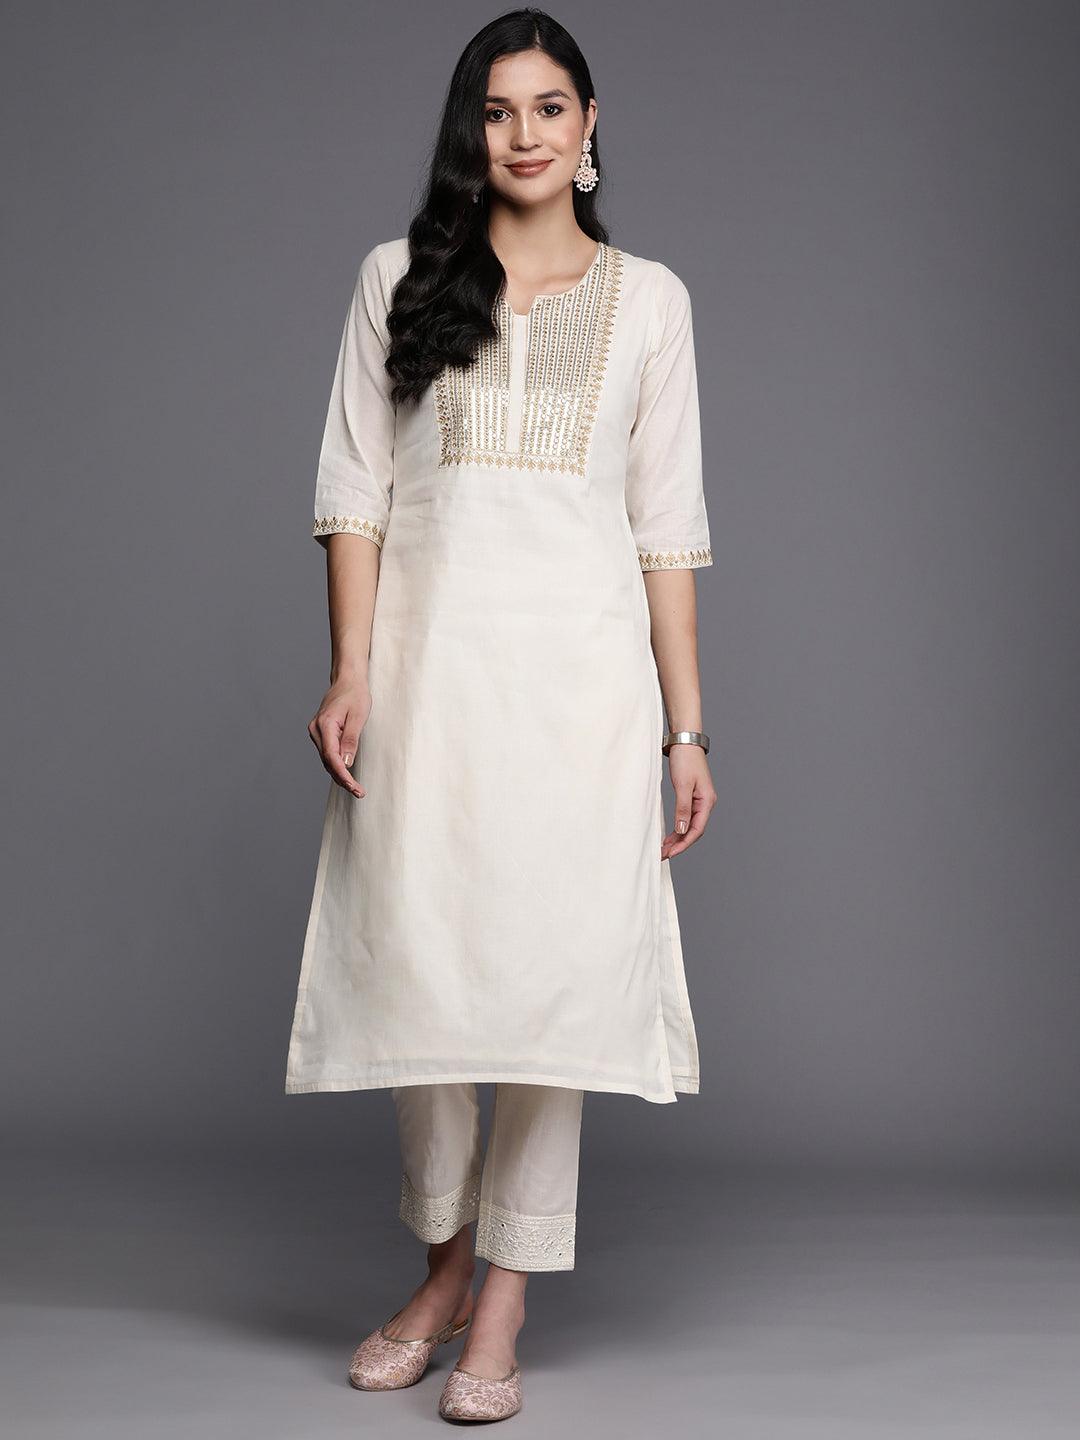 Buy Off White Yoke Design Cotton Straight Kurta Online at Rs.755 | Libas